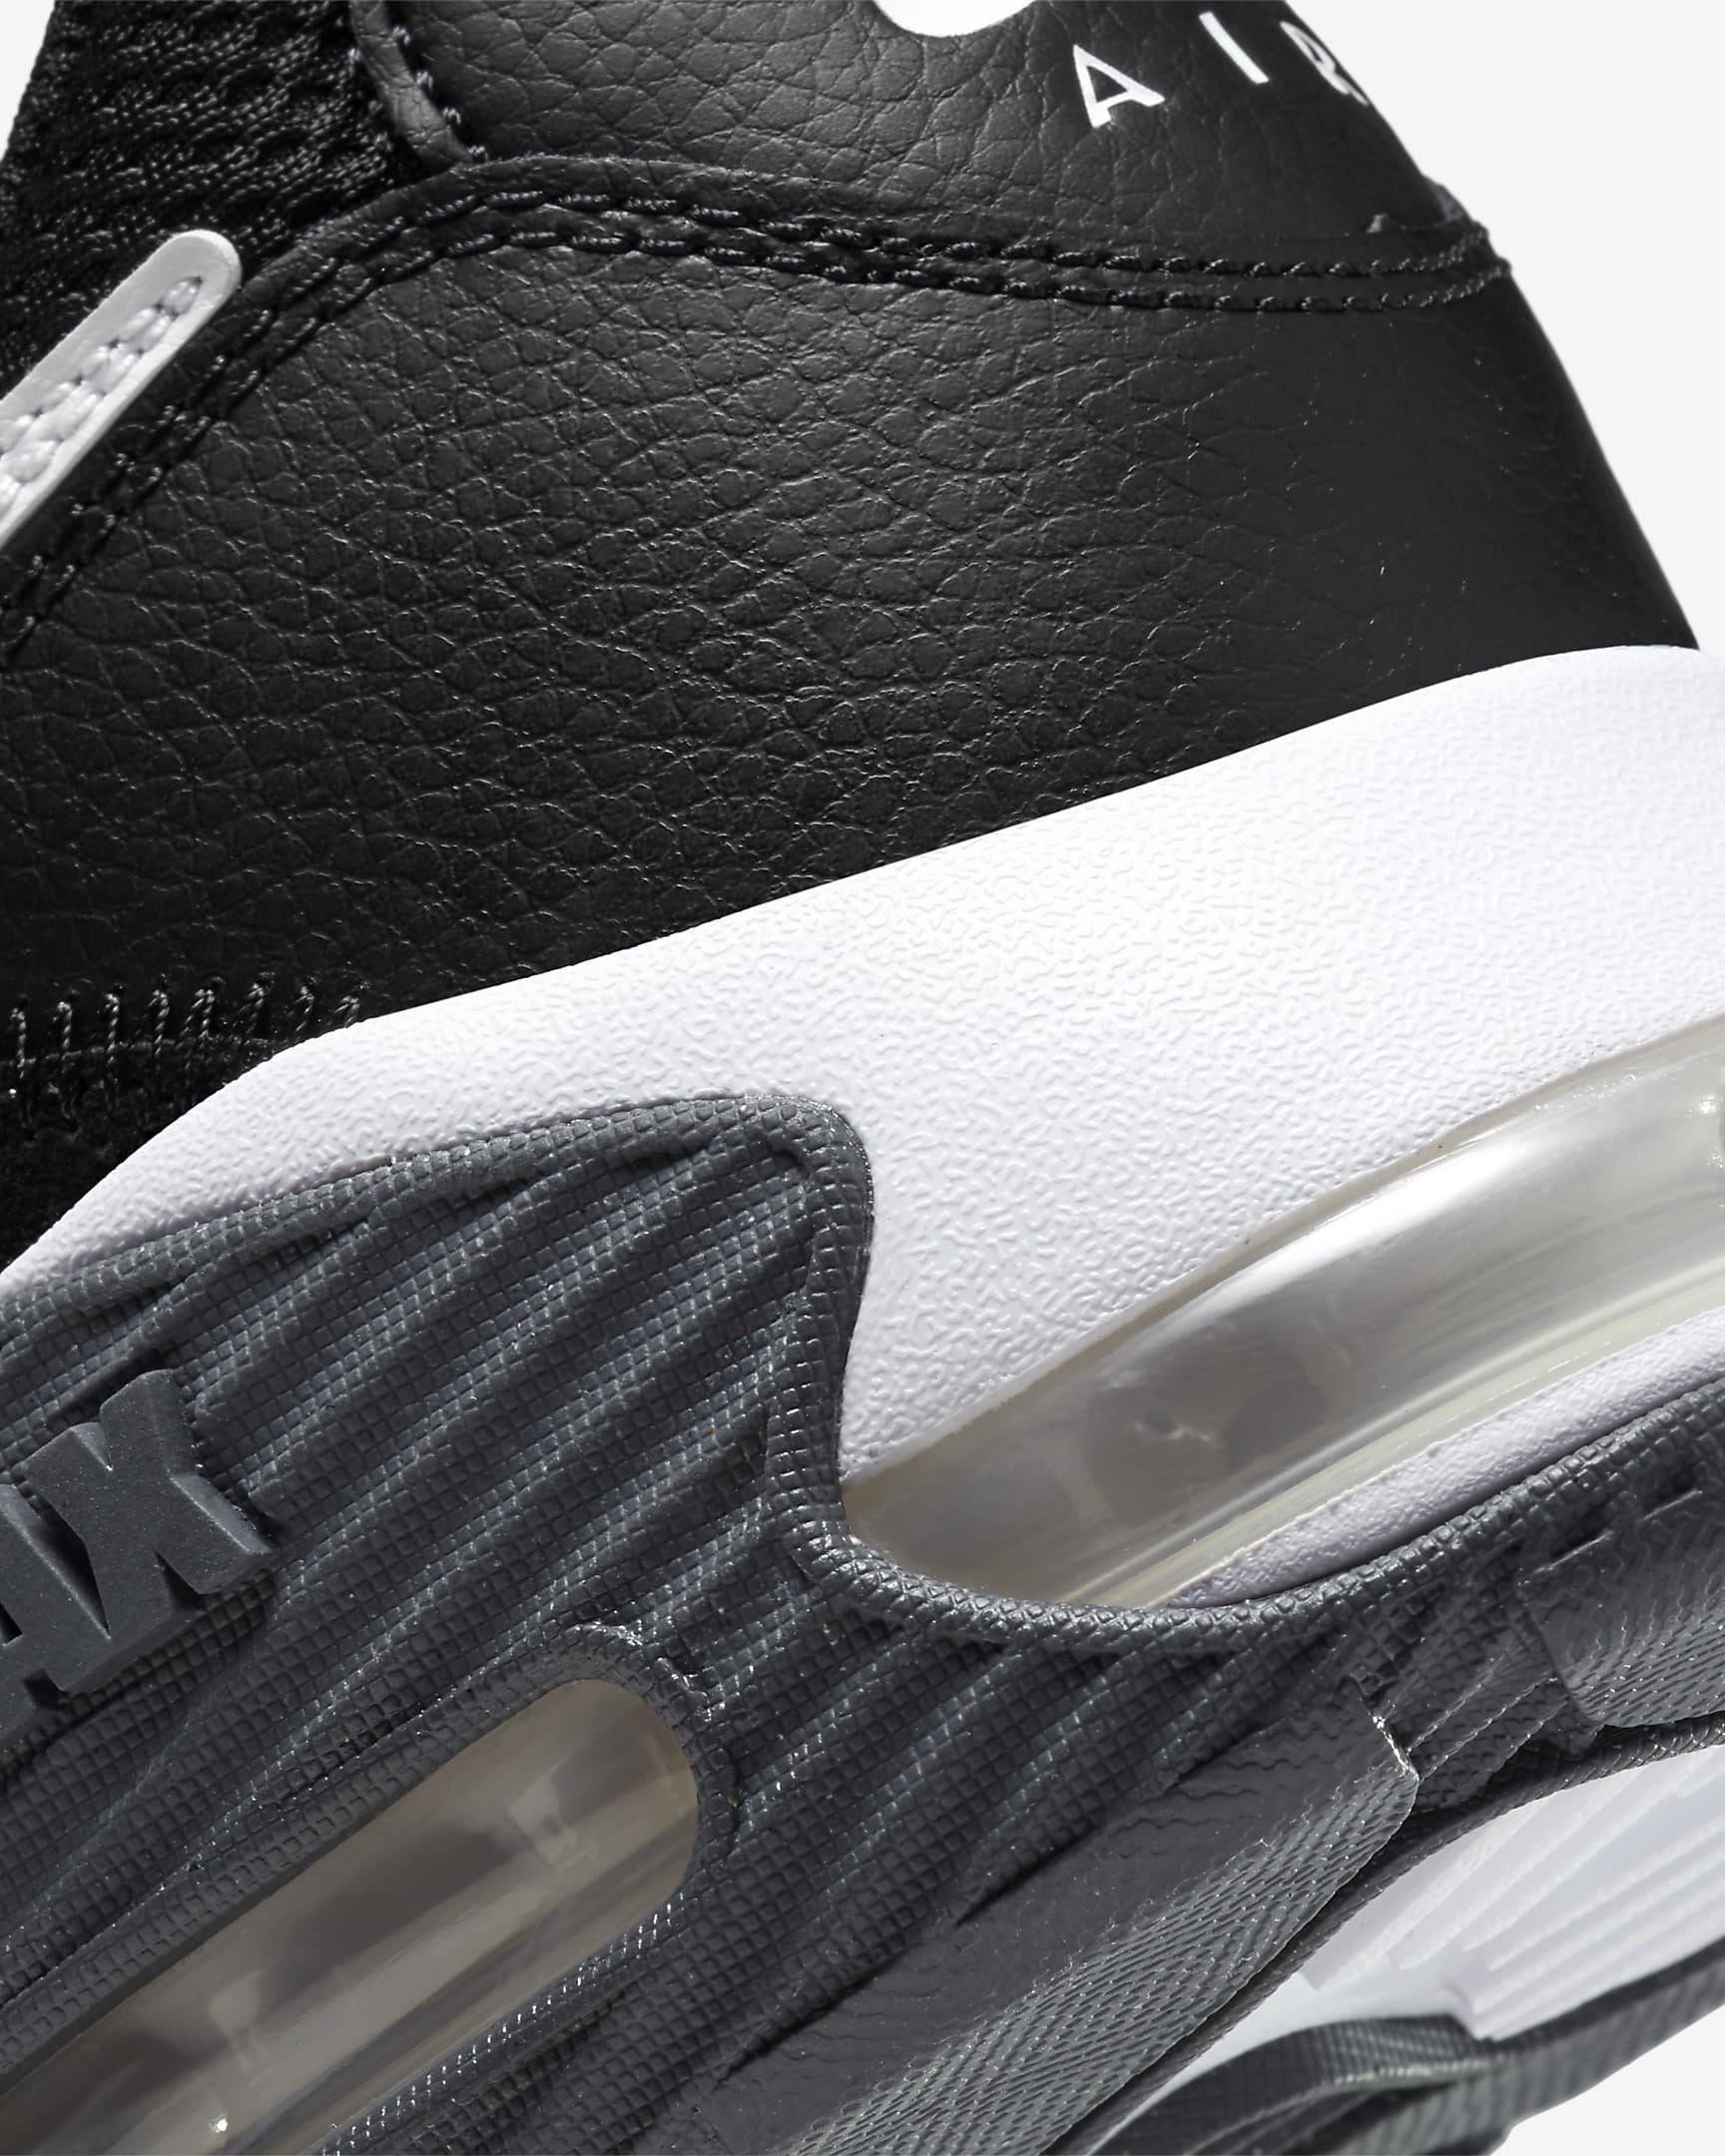 Chaussure Nike Air Max Excee pour Homme - Noir/Dark Grey/Blanc